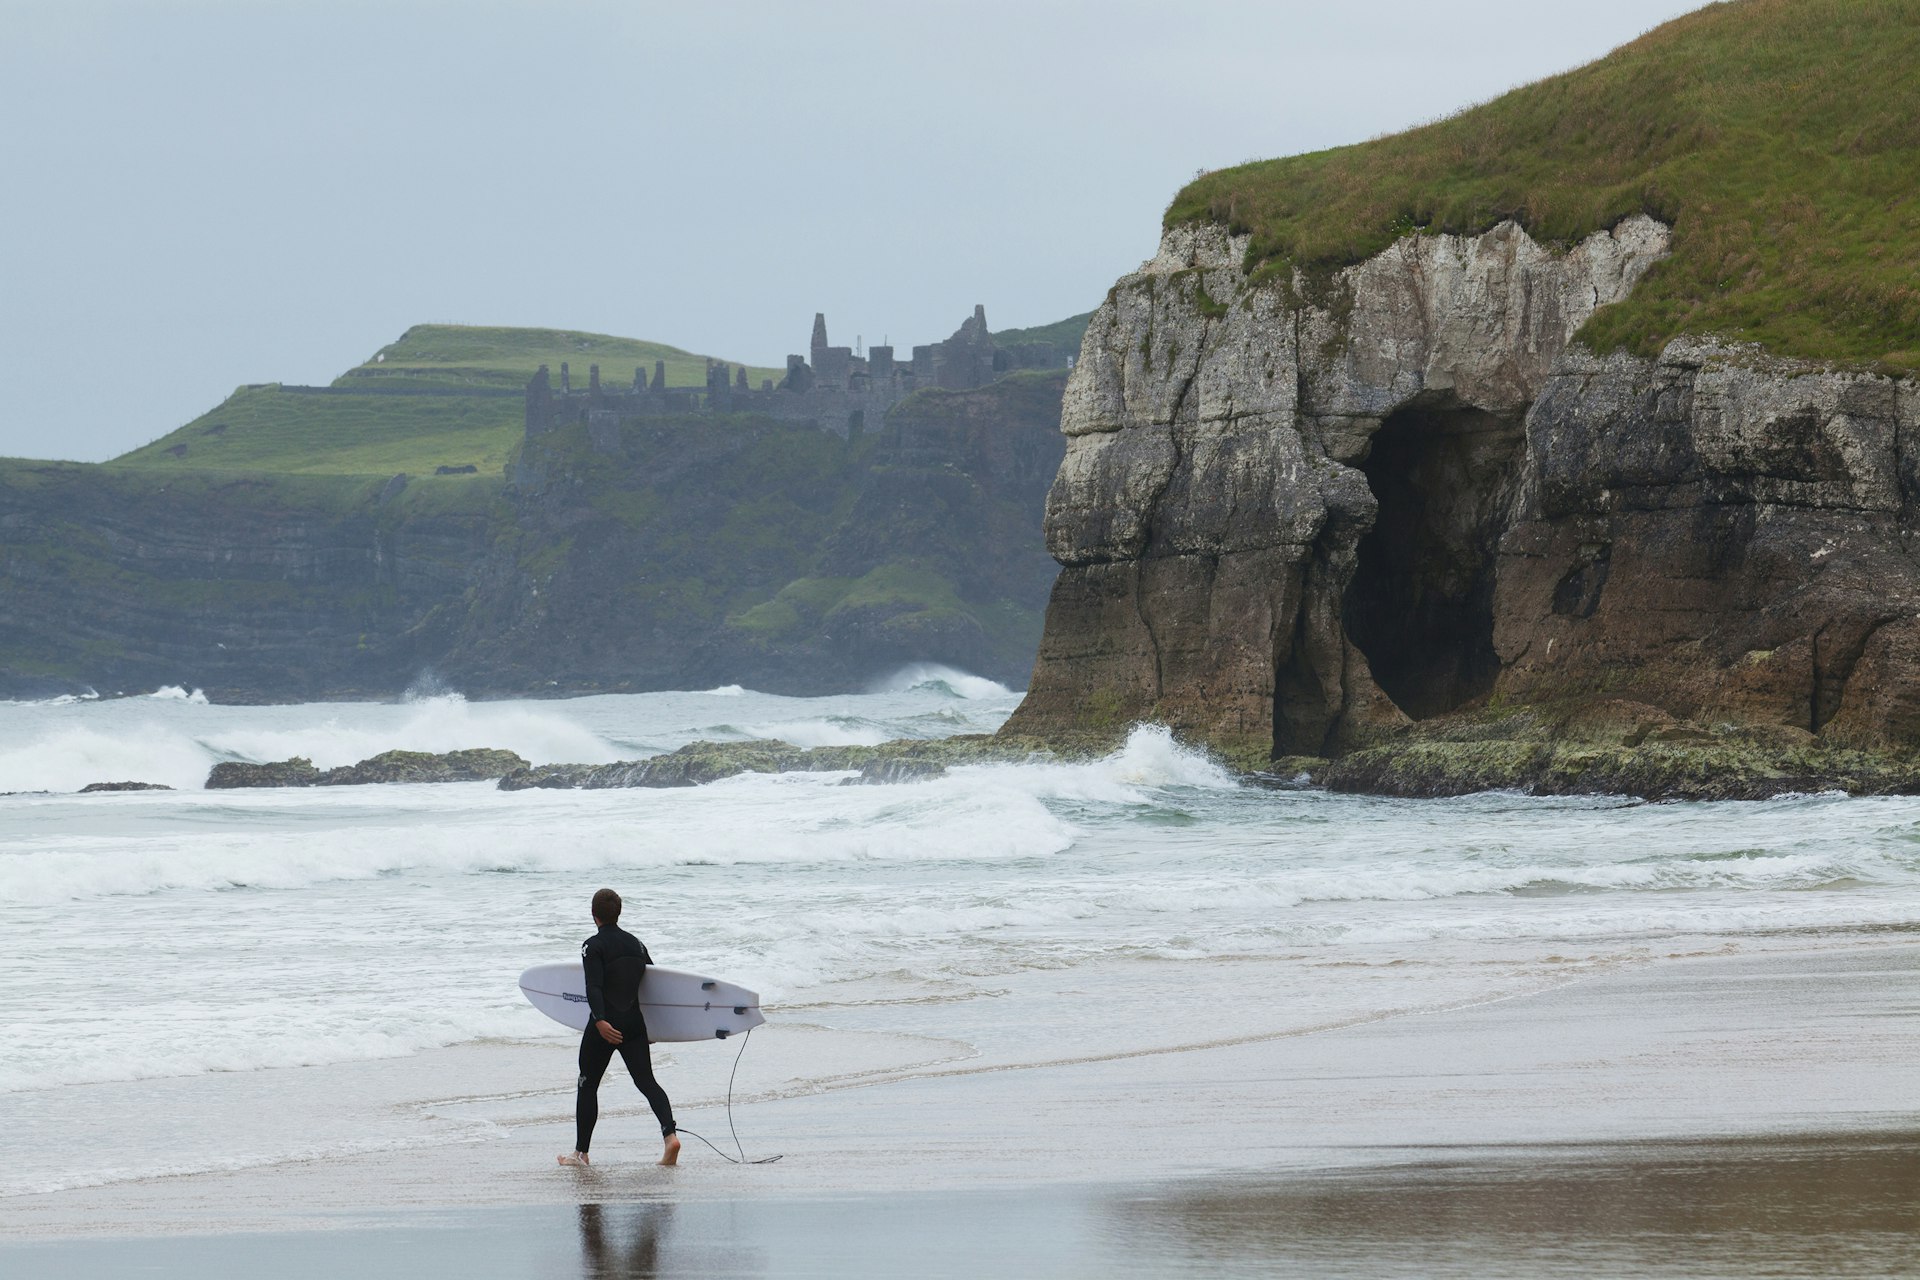 Surfer hitting the waves at a beach near Portrush